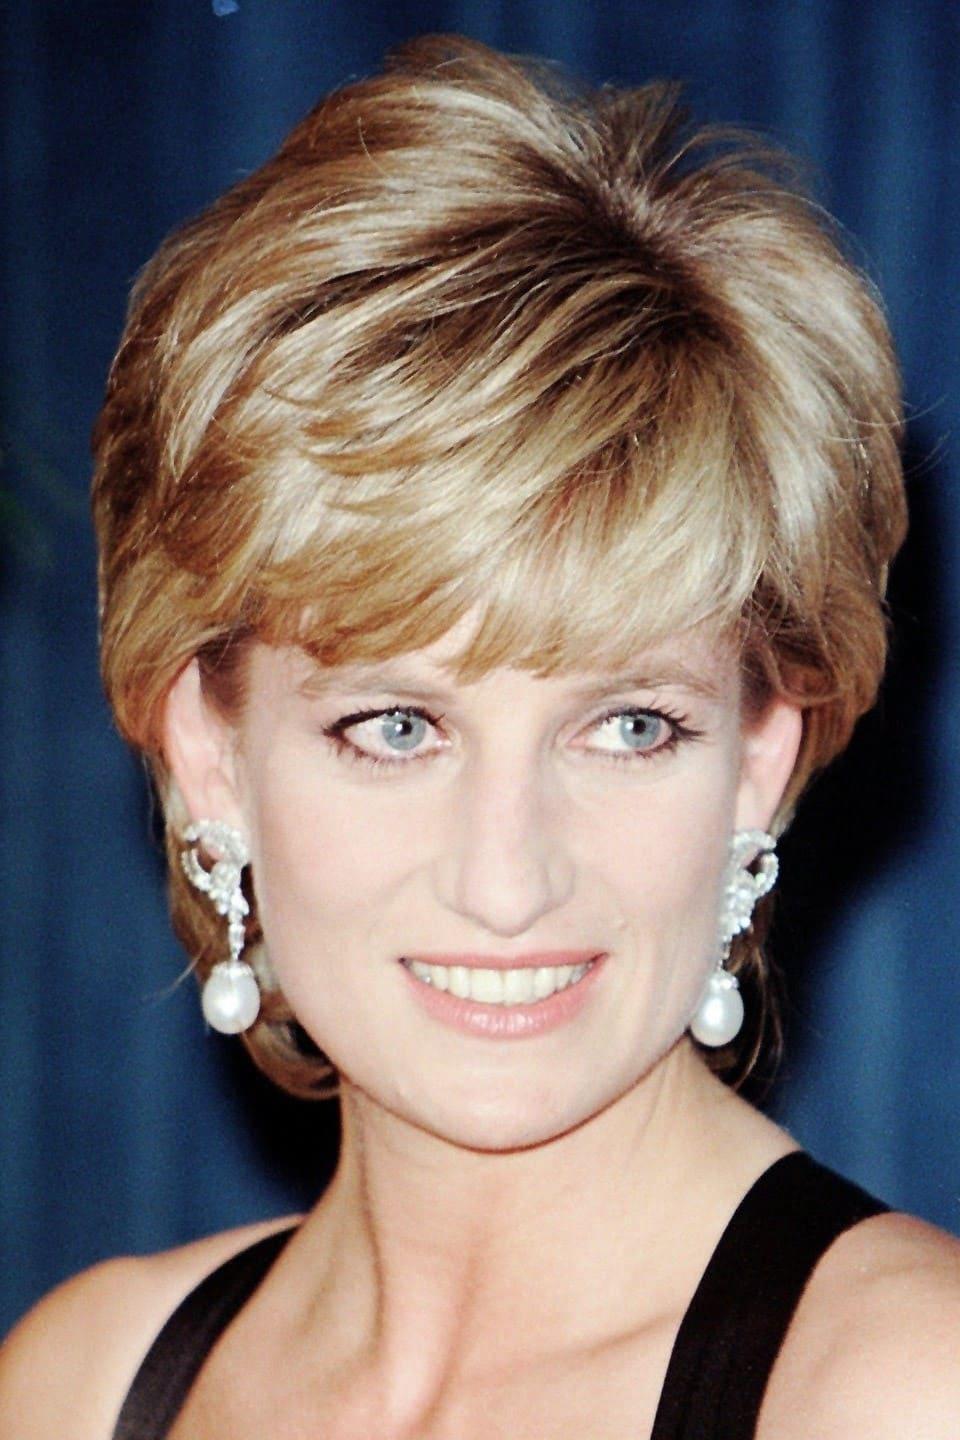 Diana, Princess of Wales poster